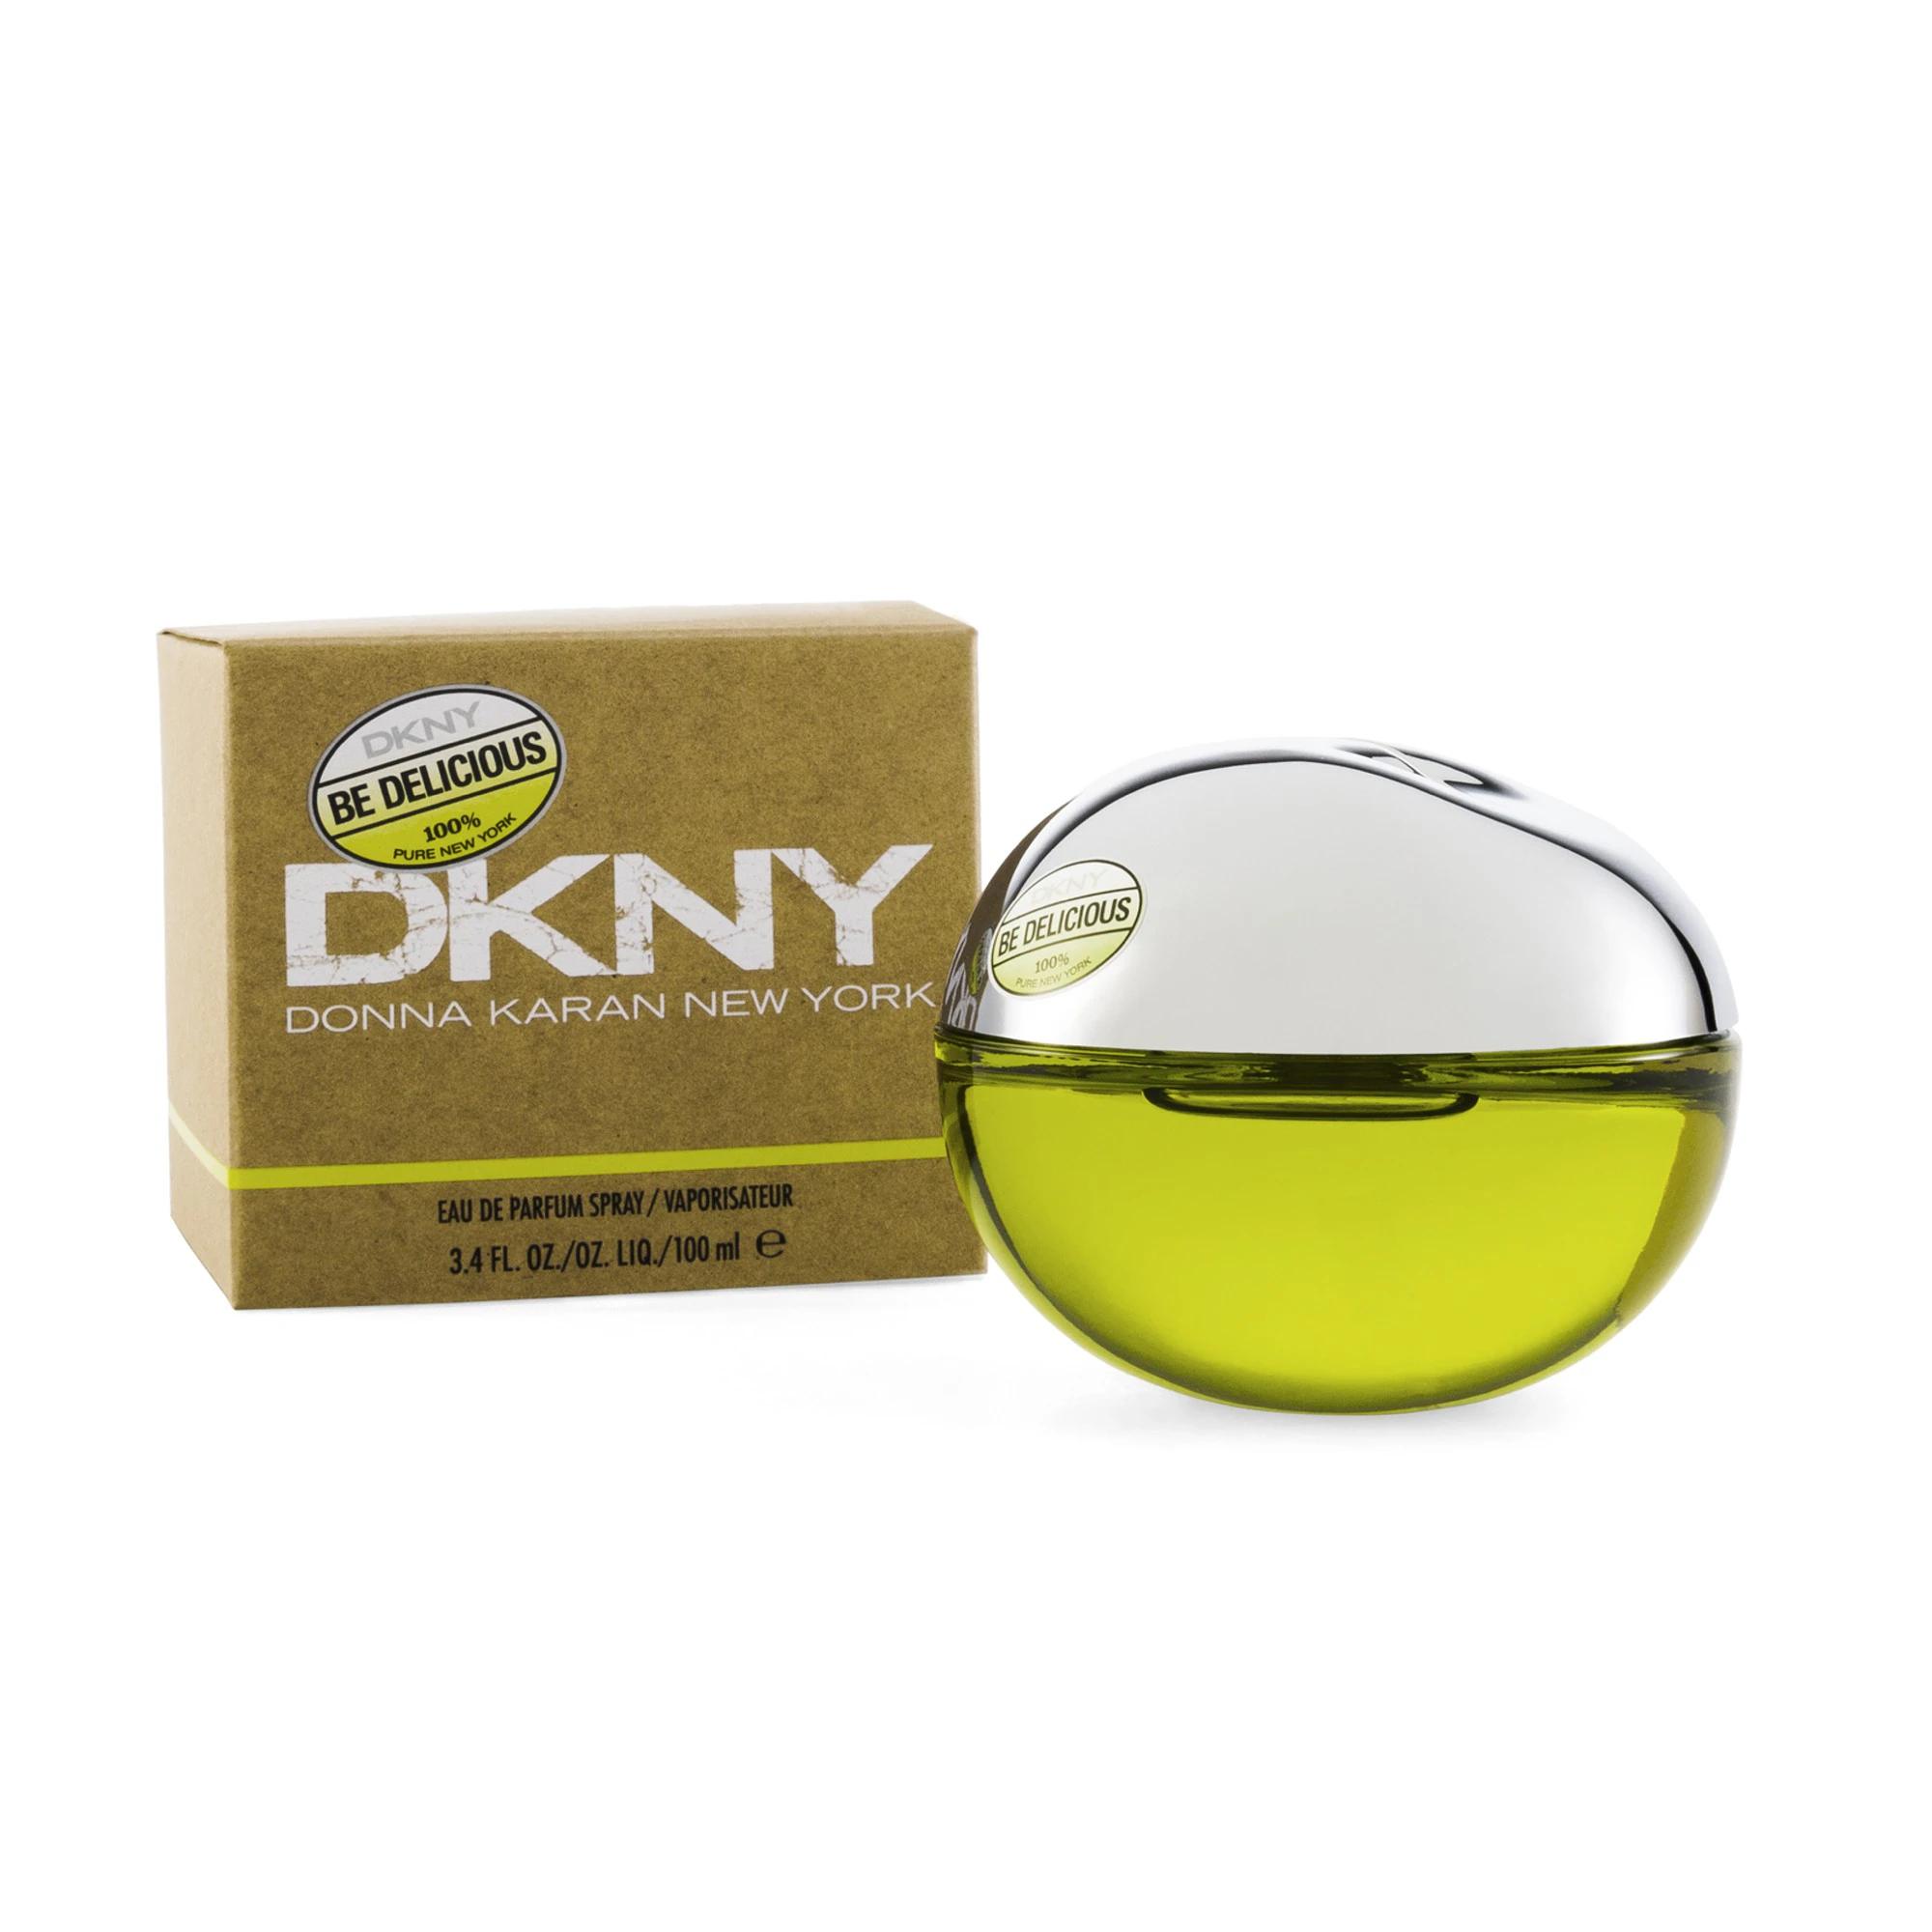 perfumes donna karan para mujer - Cuánto cuesta el perfume Donna Karan